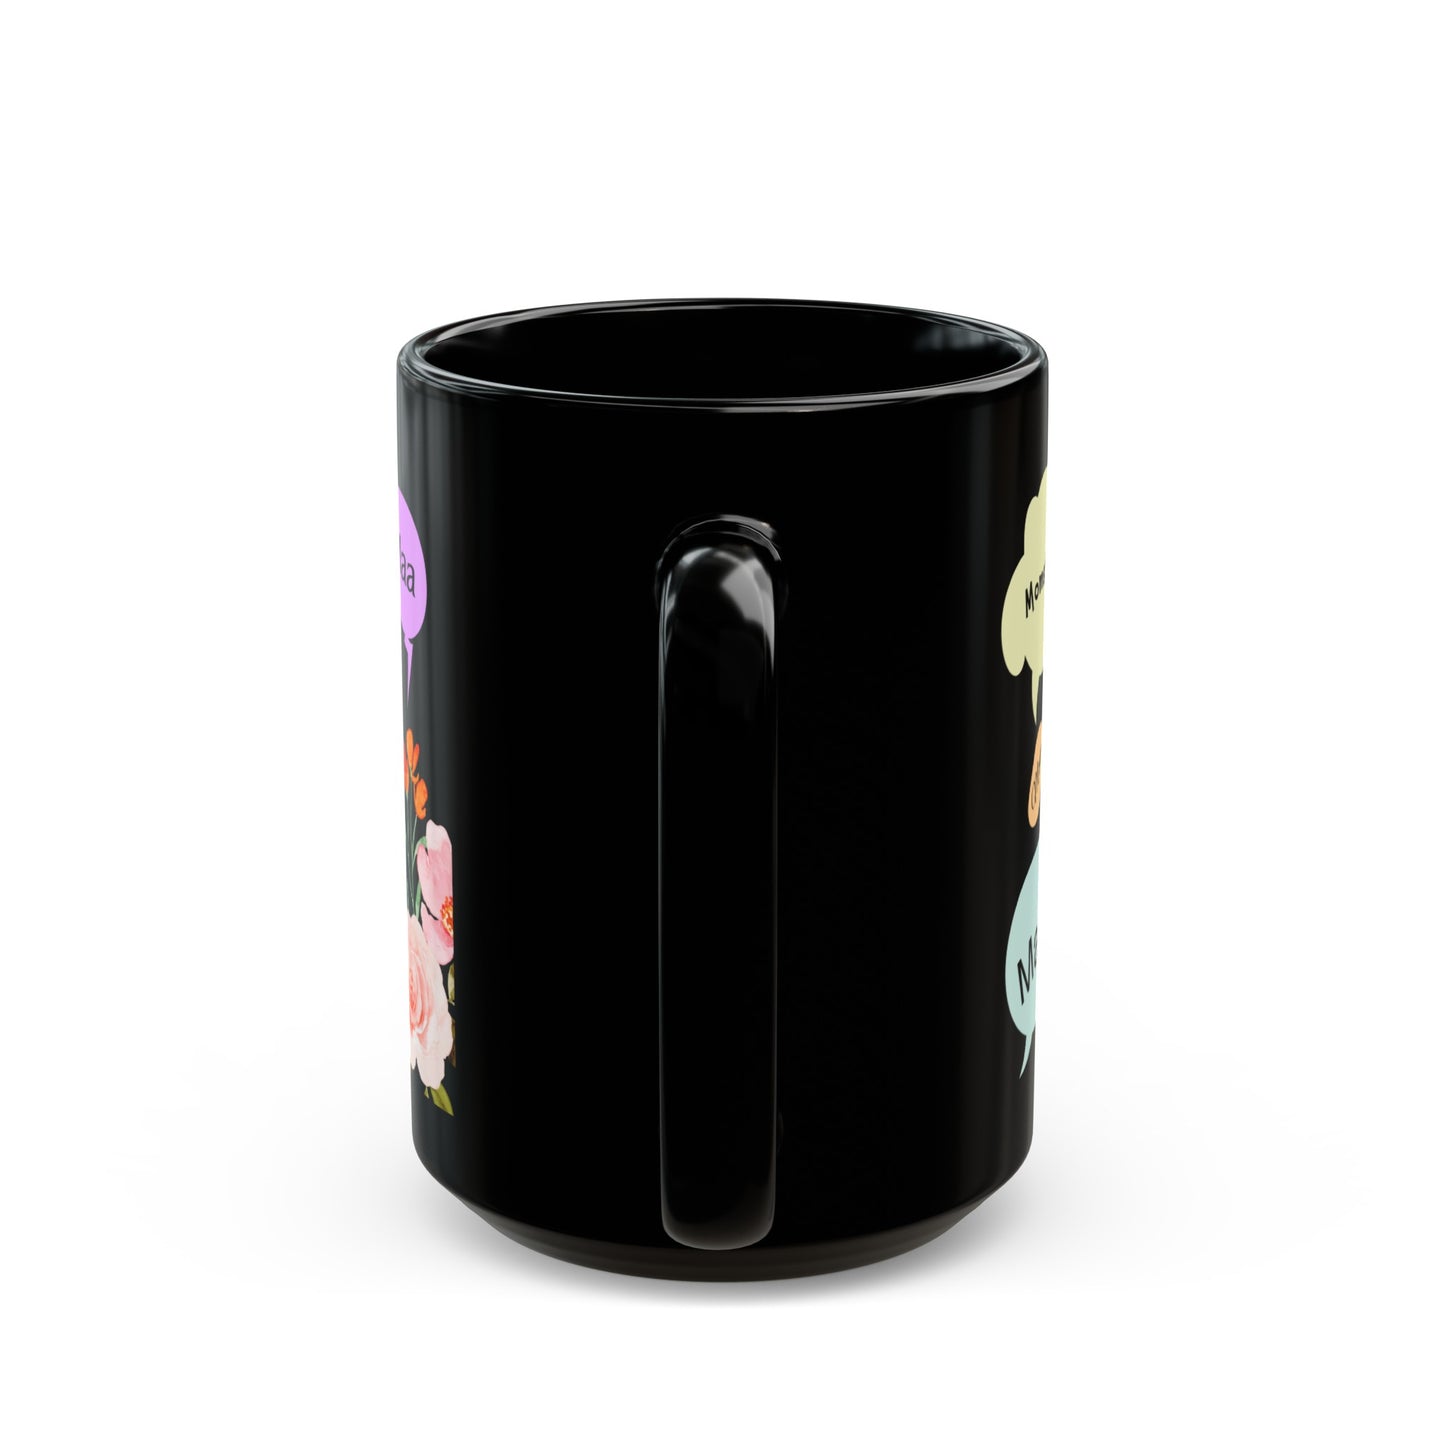 Mama Mug (multi)/ Black Mug (11oz, 15oz)